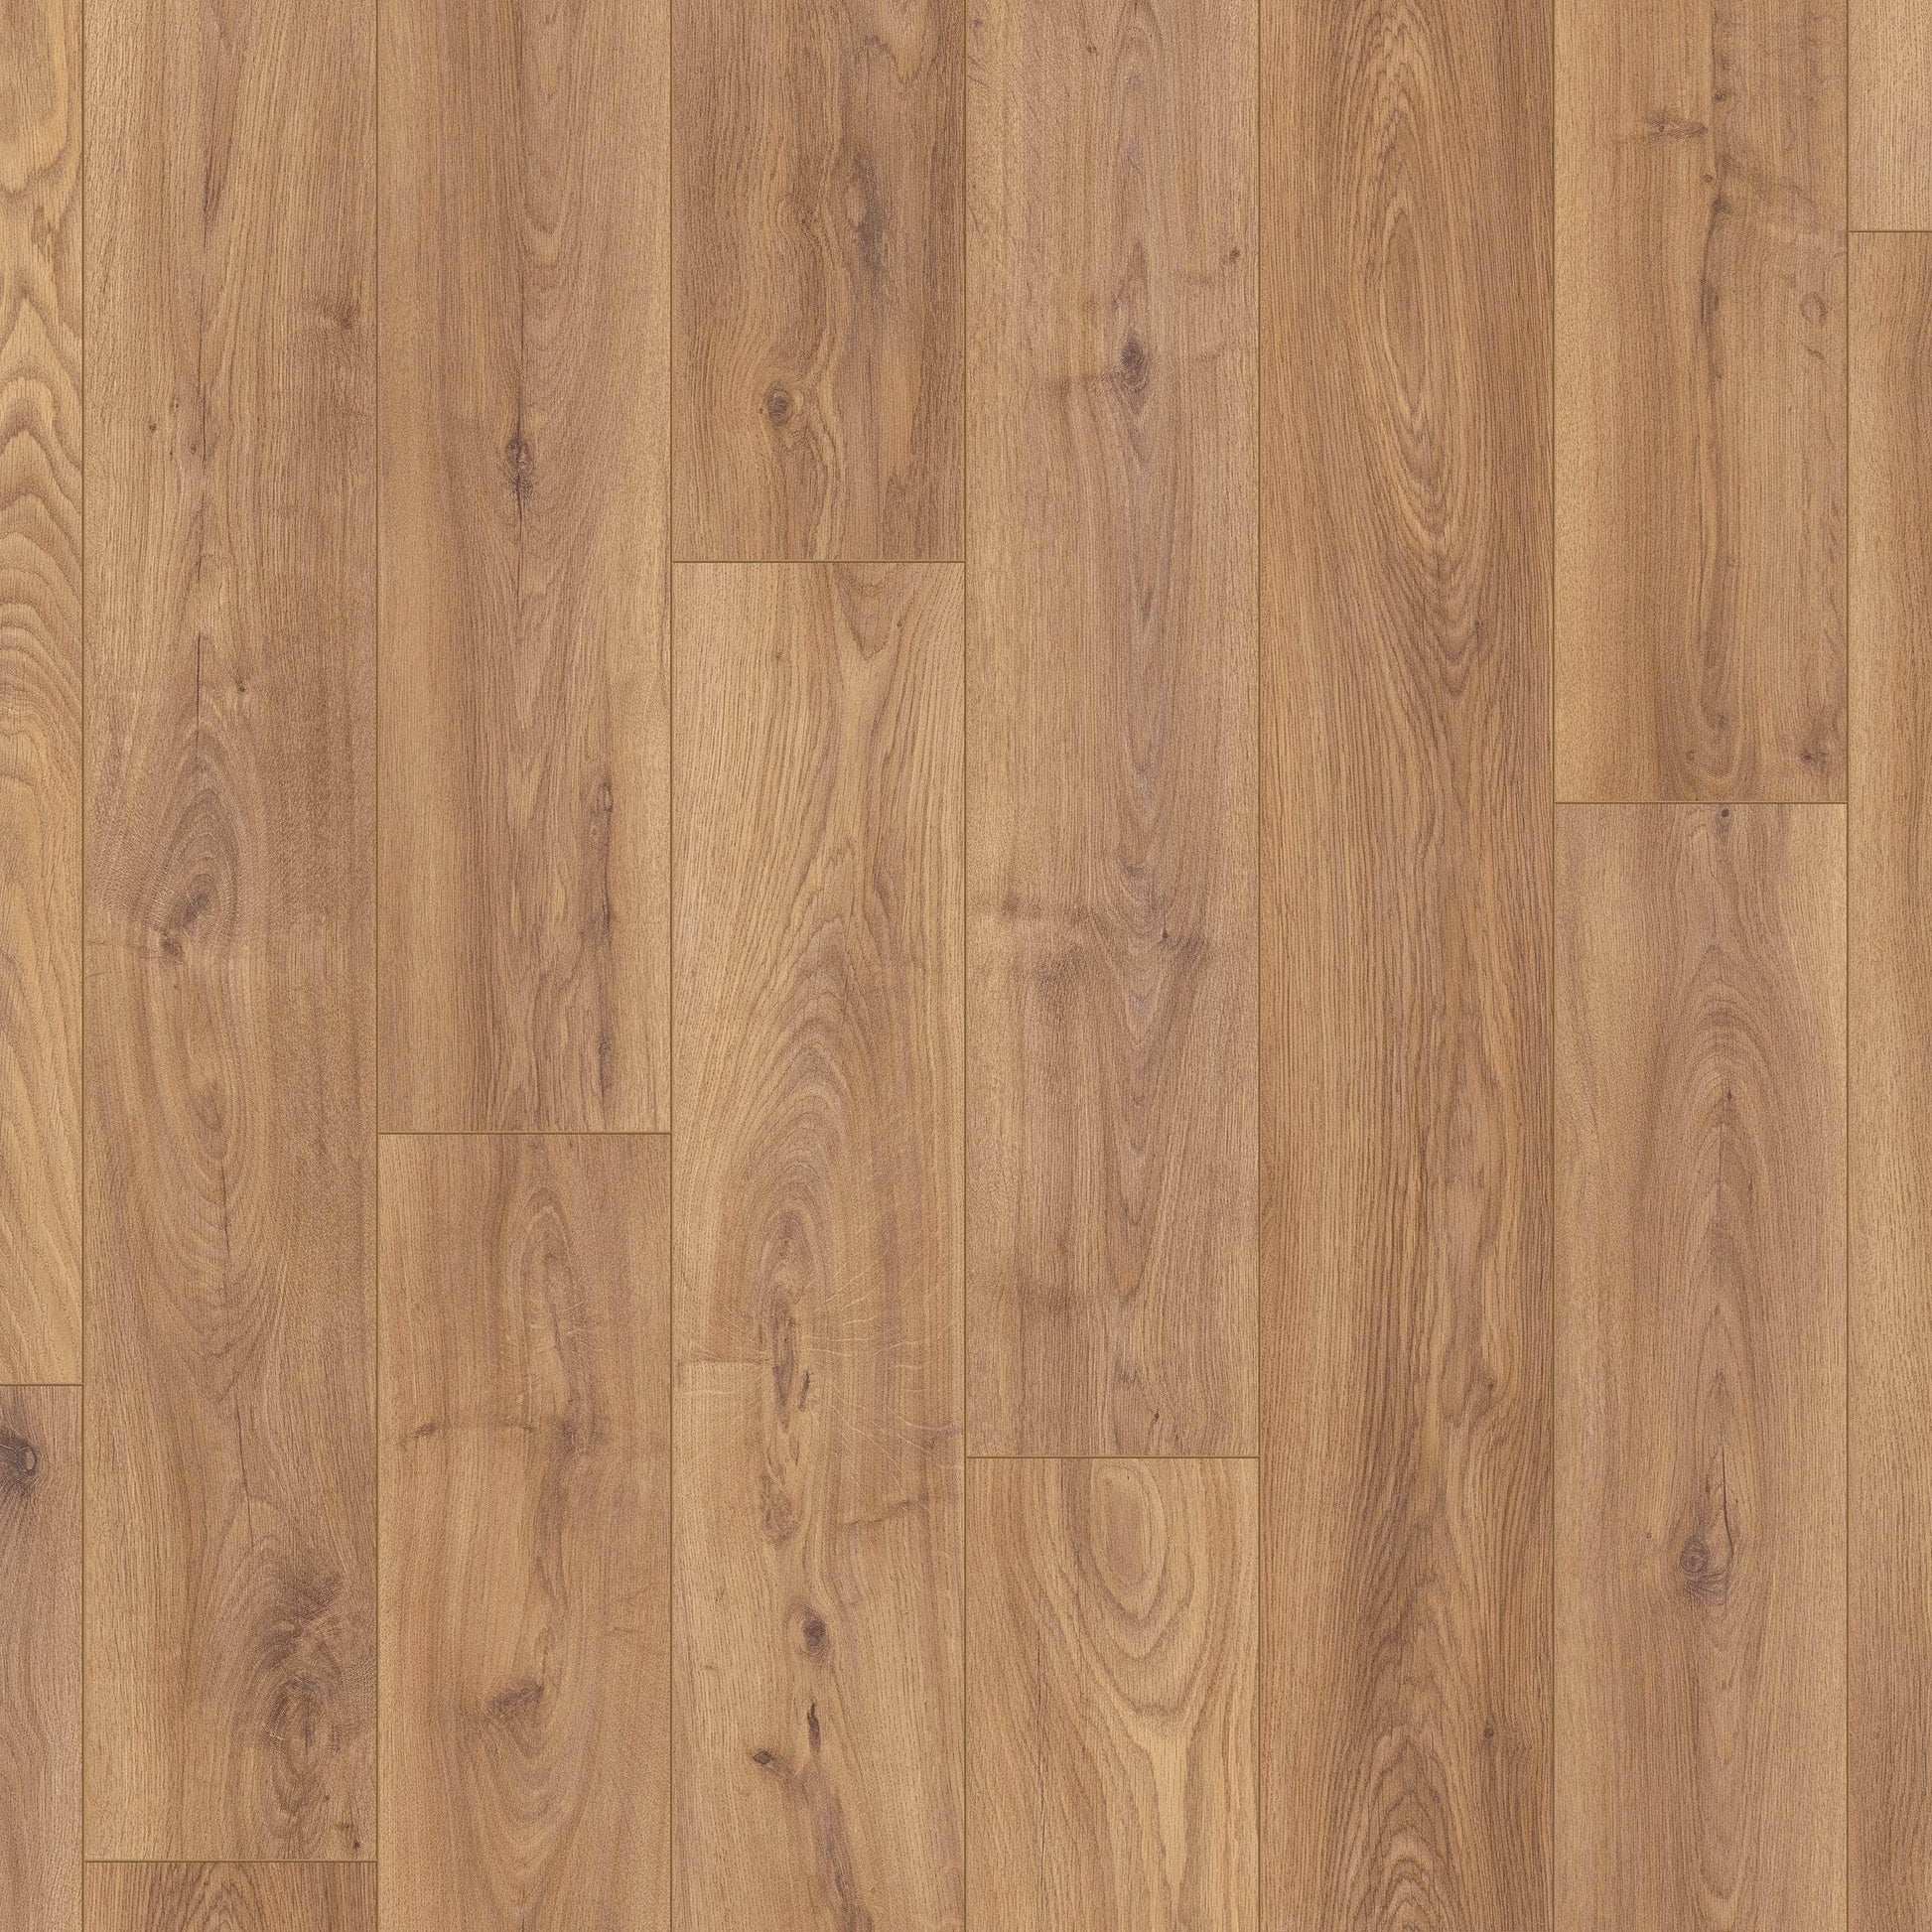 Flooring & Carpet  -  Krono Atlantic Firebrand Oak 8mm Laminate Flooring (2.22m² Pack)  -  60007169